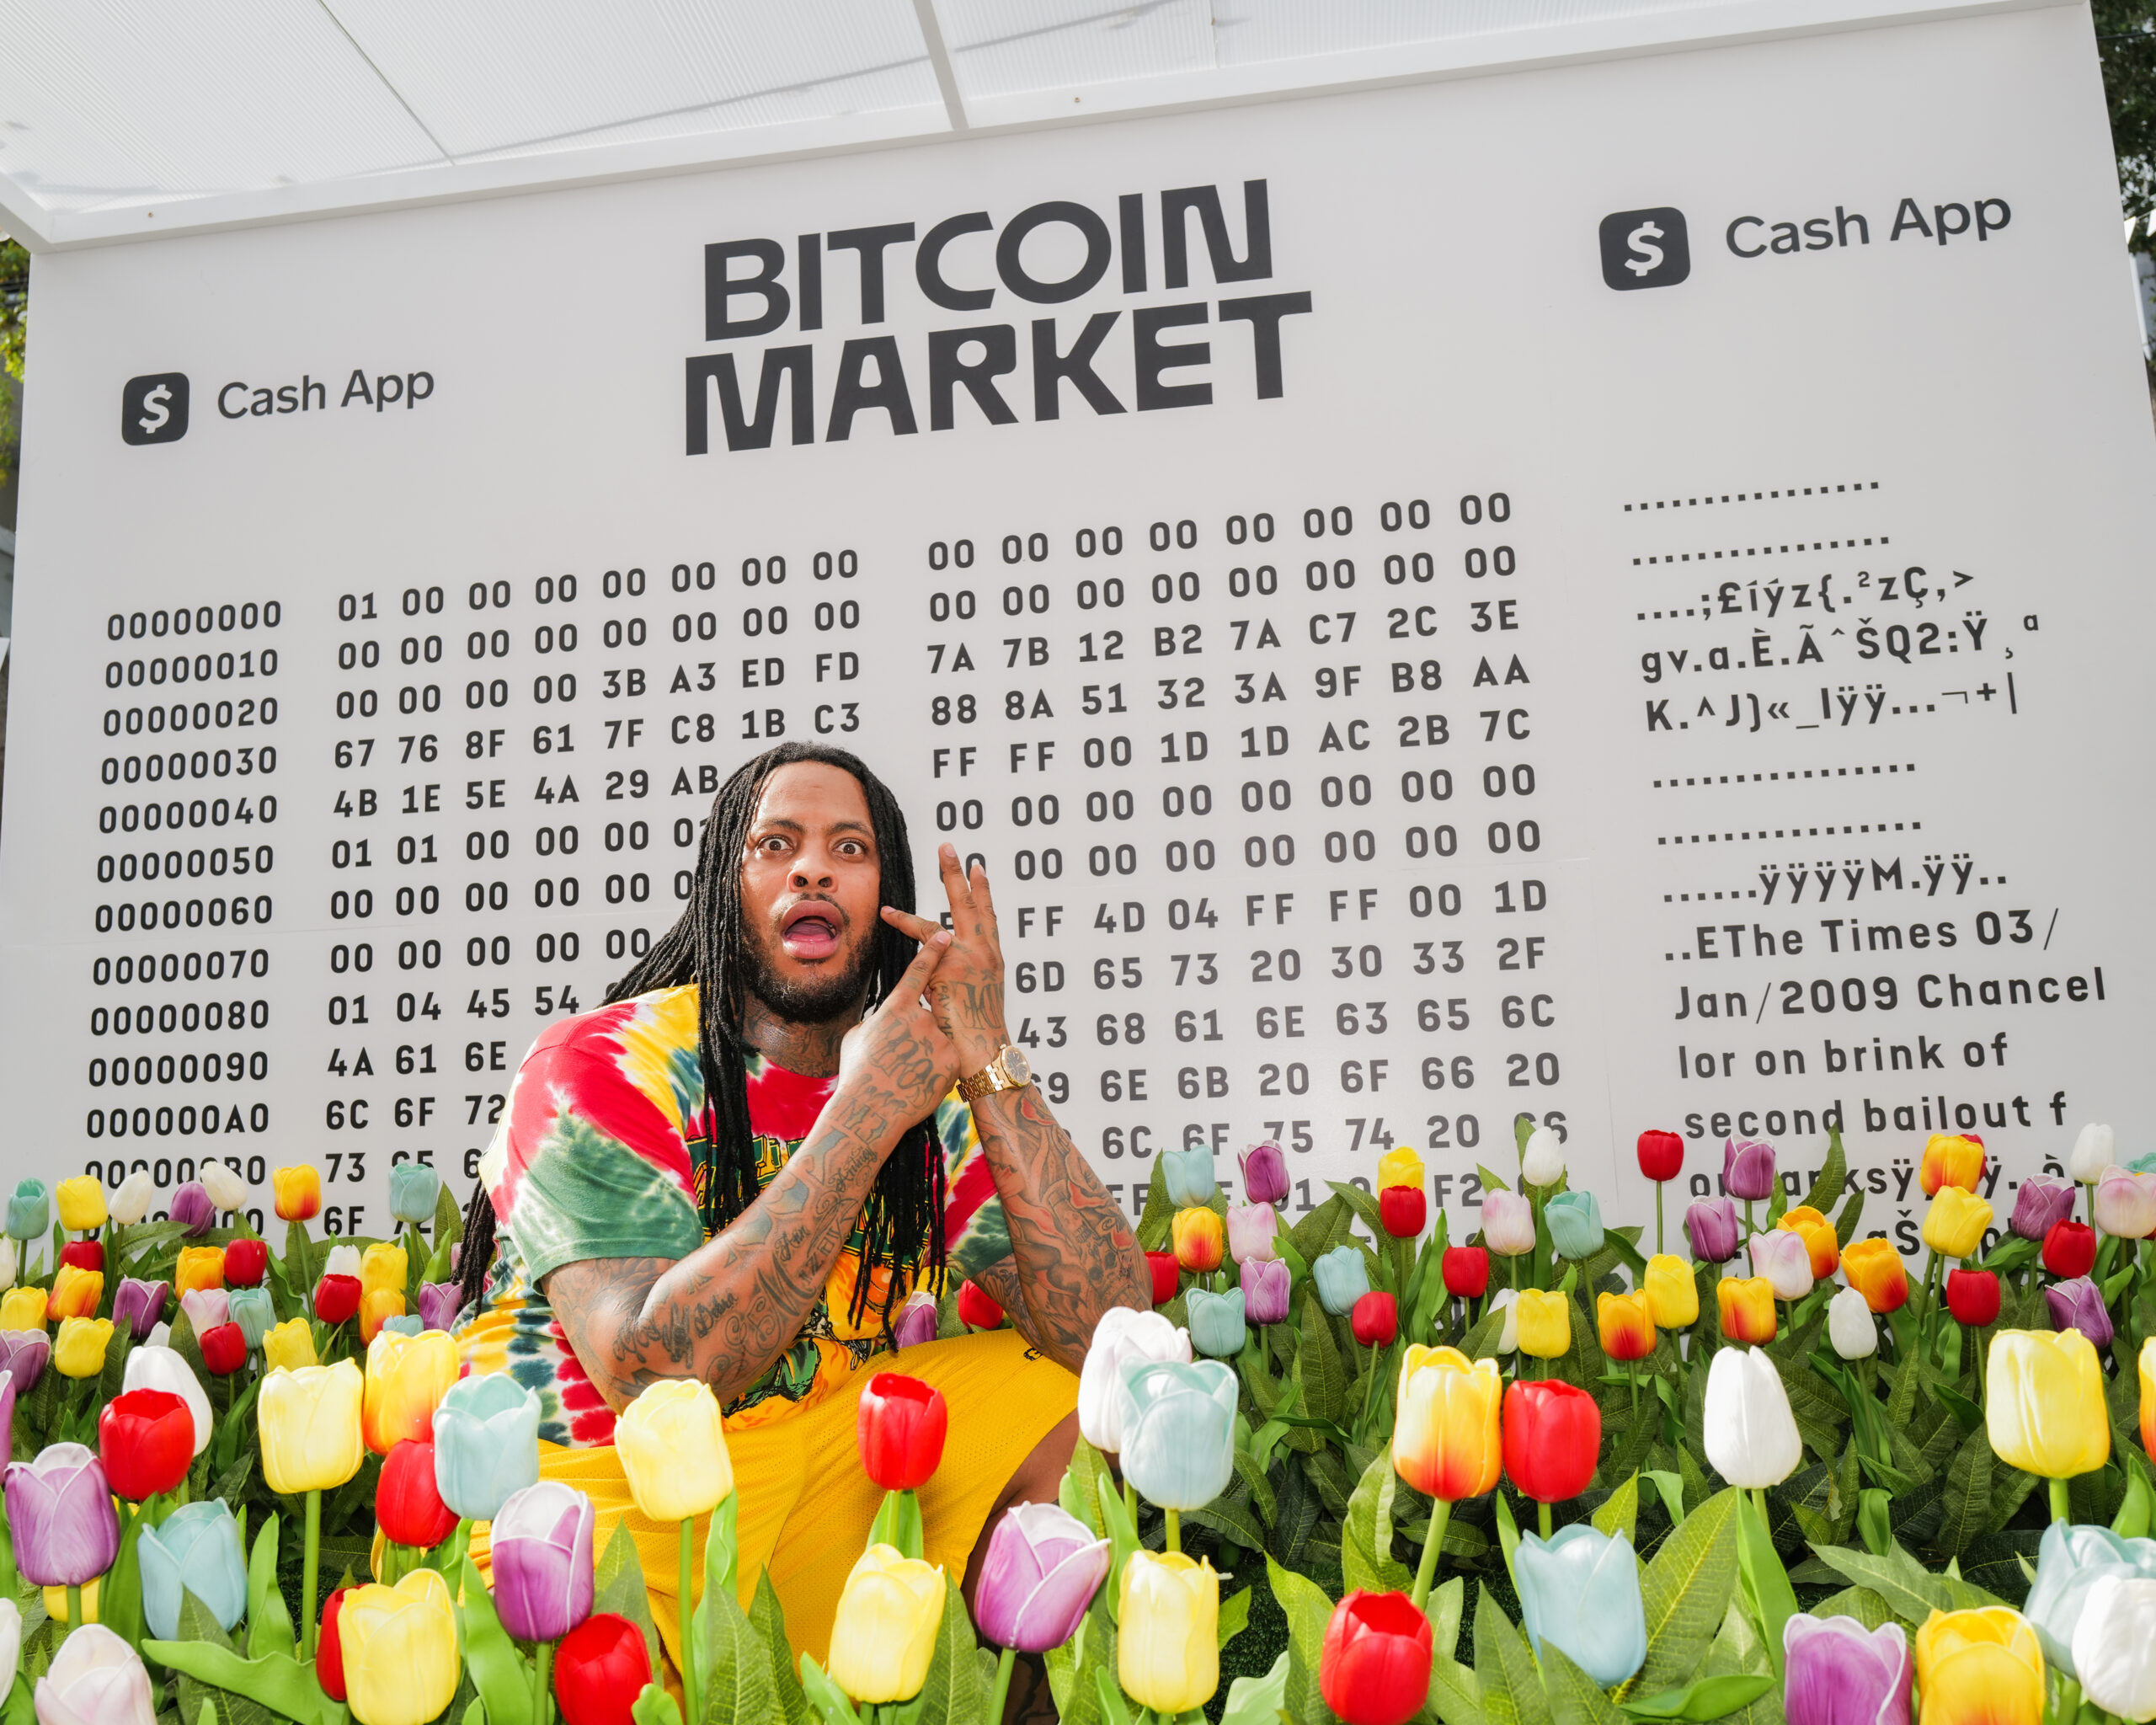 The Cash App Bitcoin Market